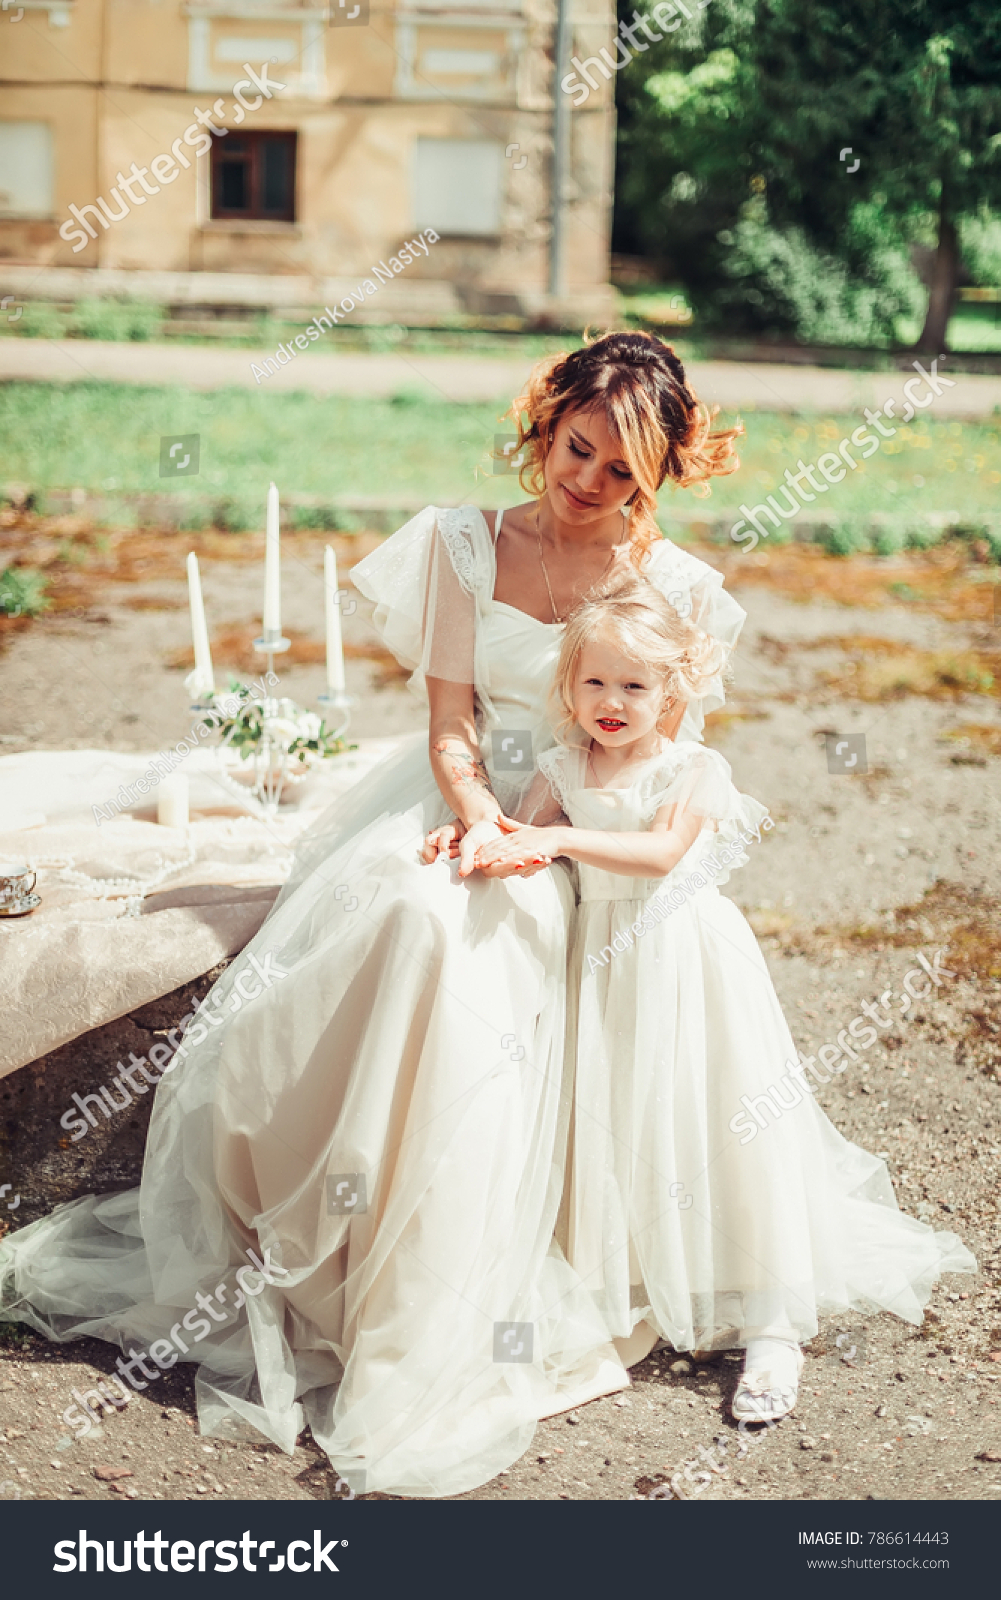 mum and daughter wedding dress